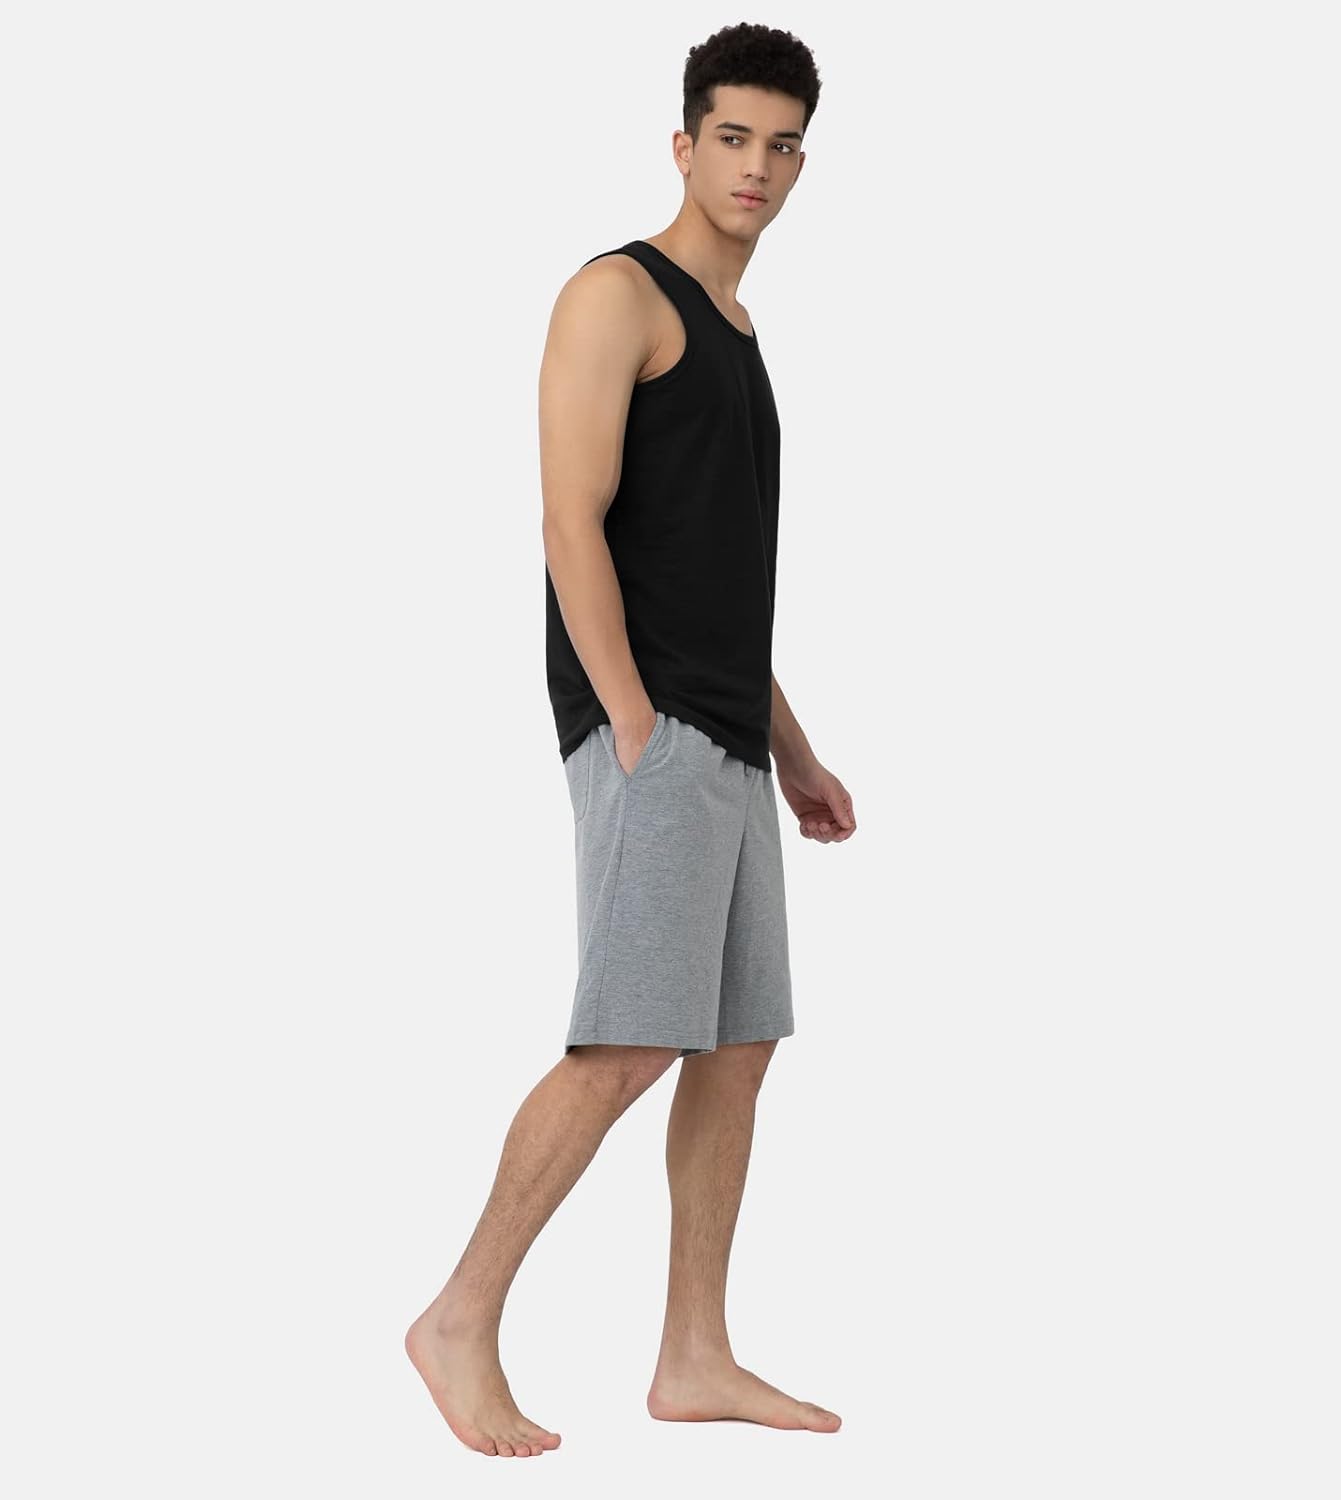 Wholesale Men's 100% Cotton Tank Top Ultra Soft Sleeveless Undershirts - Black